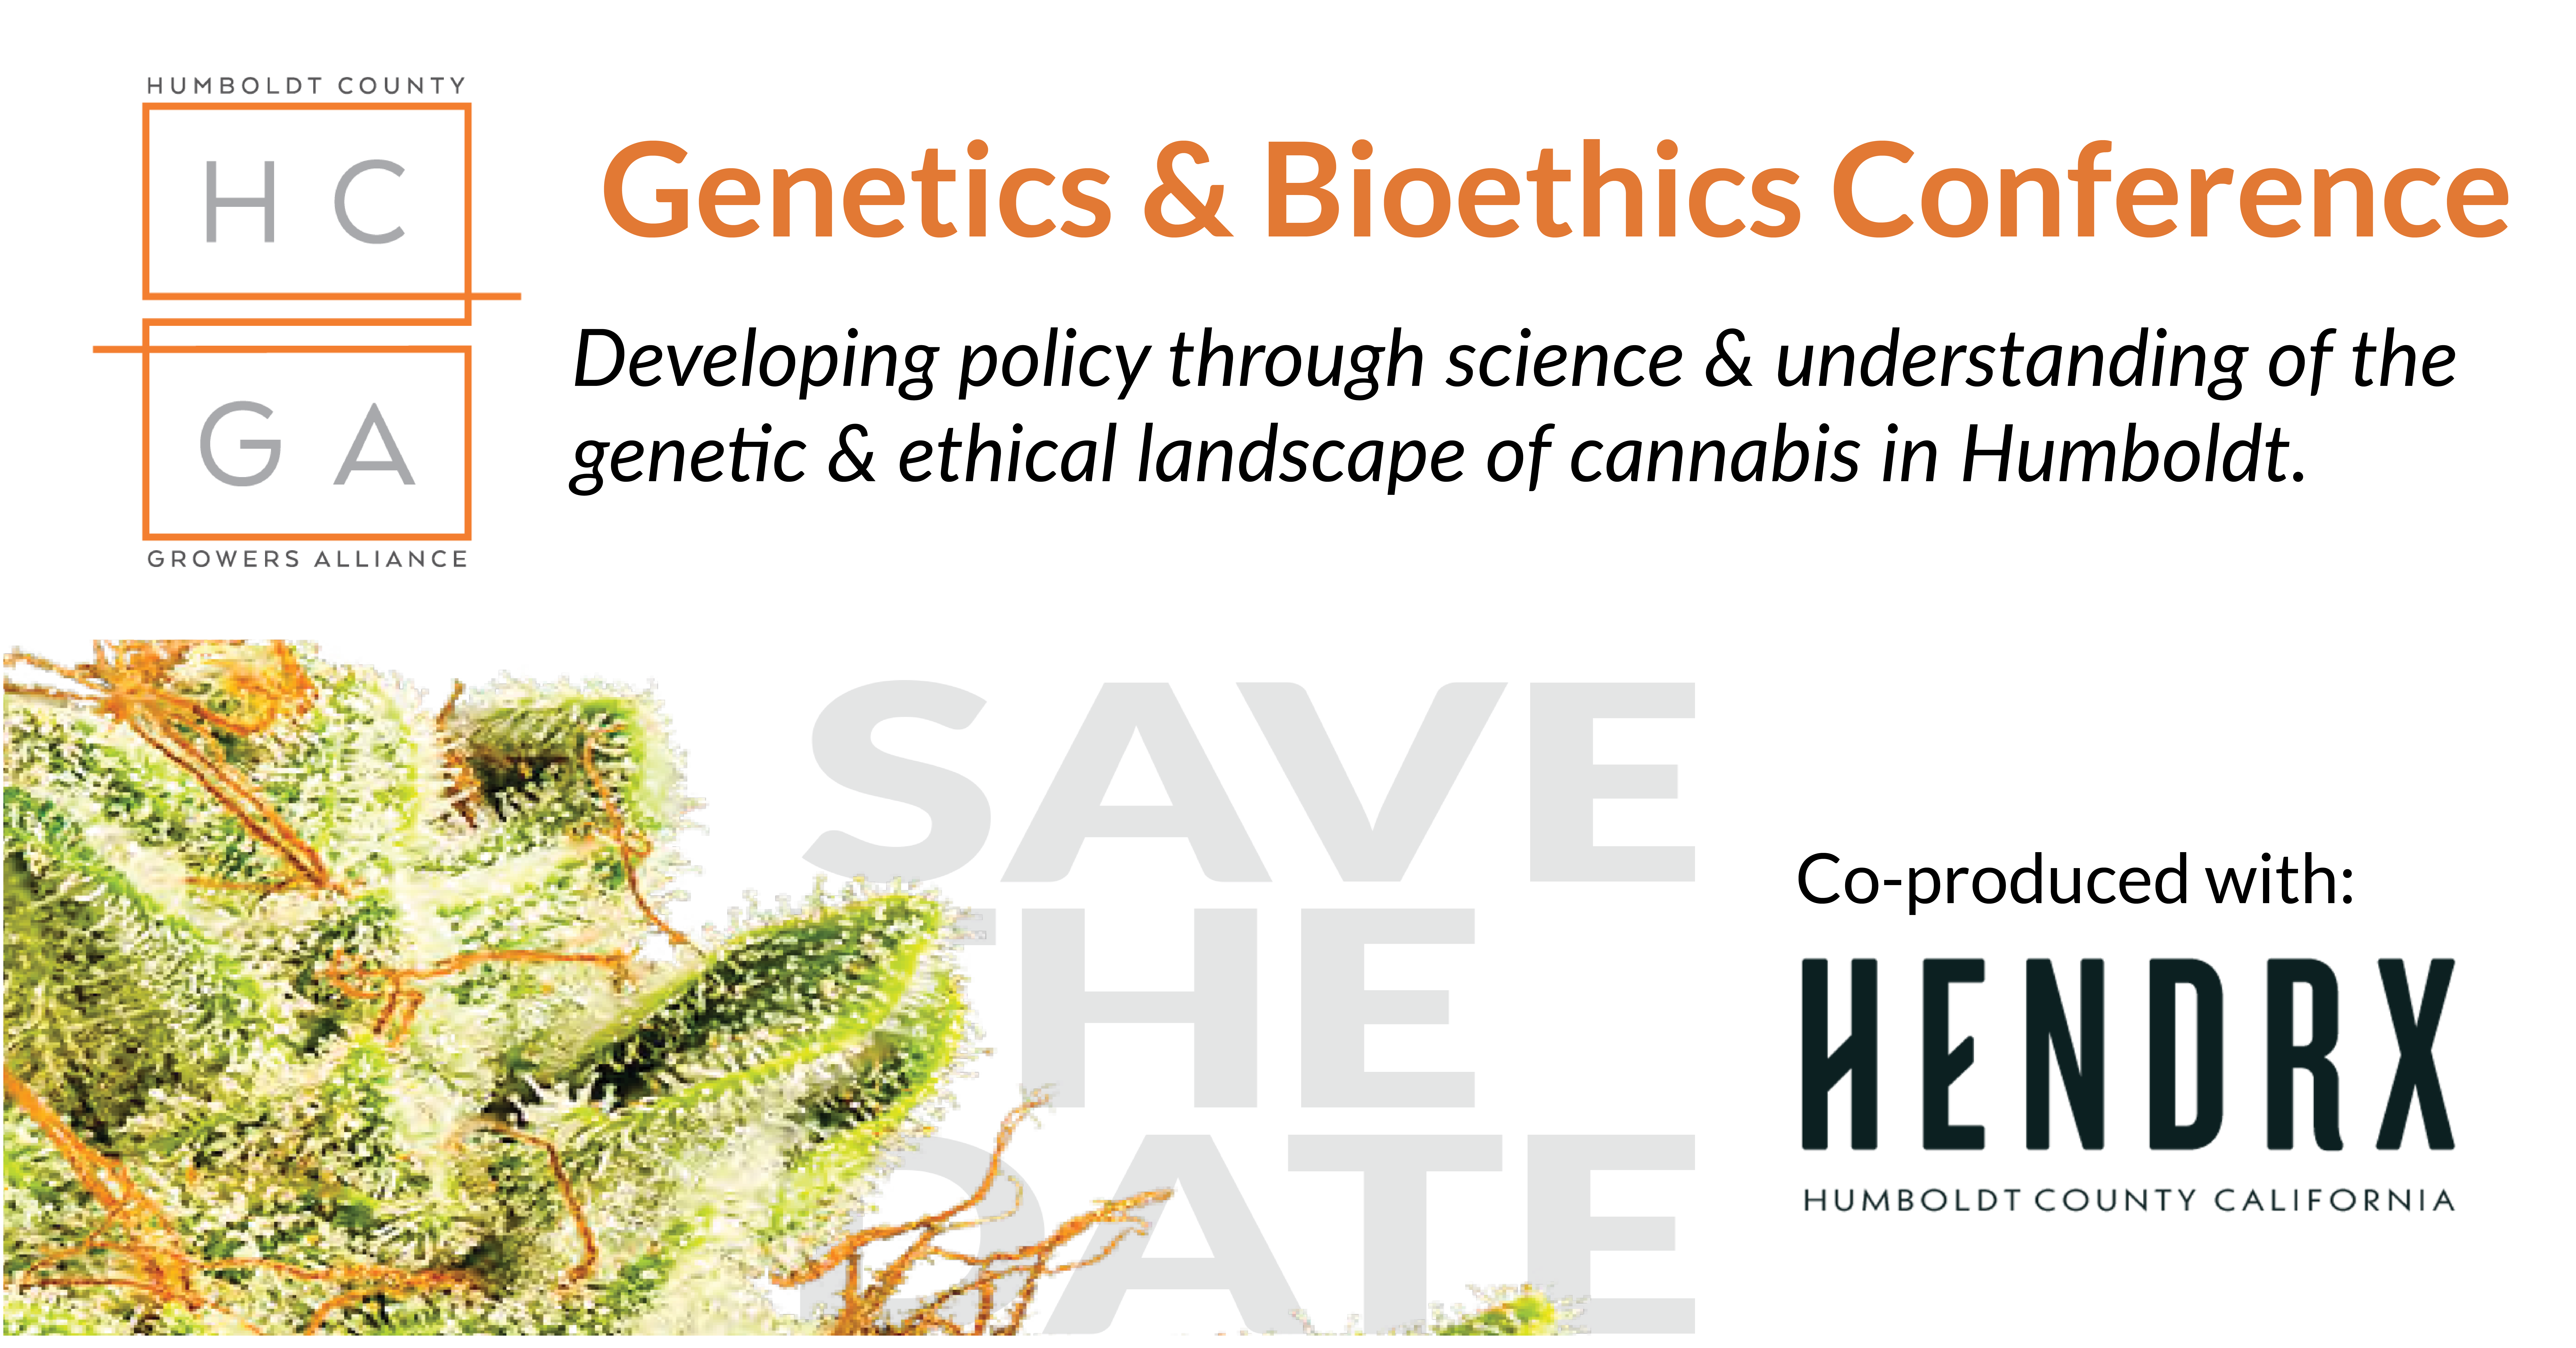 Cannabis Genetics & Bioethics Conference